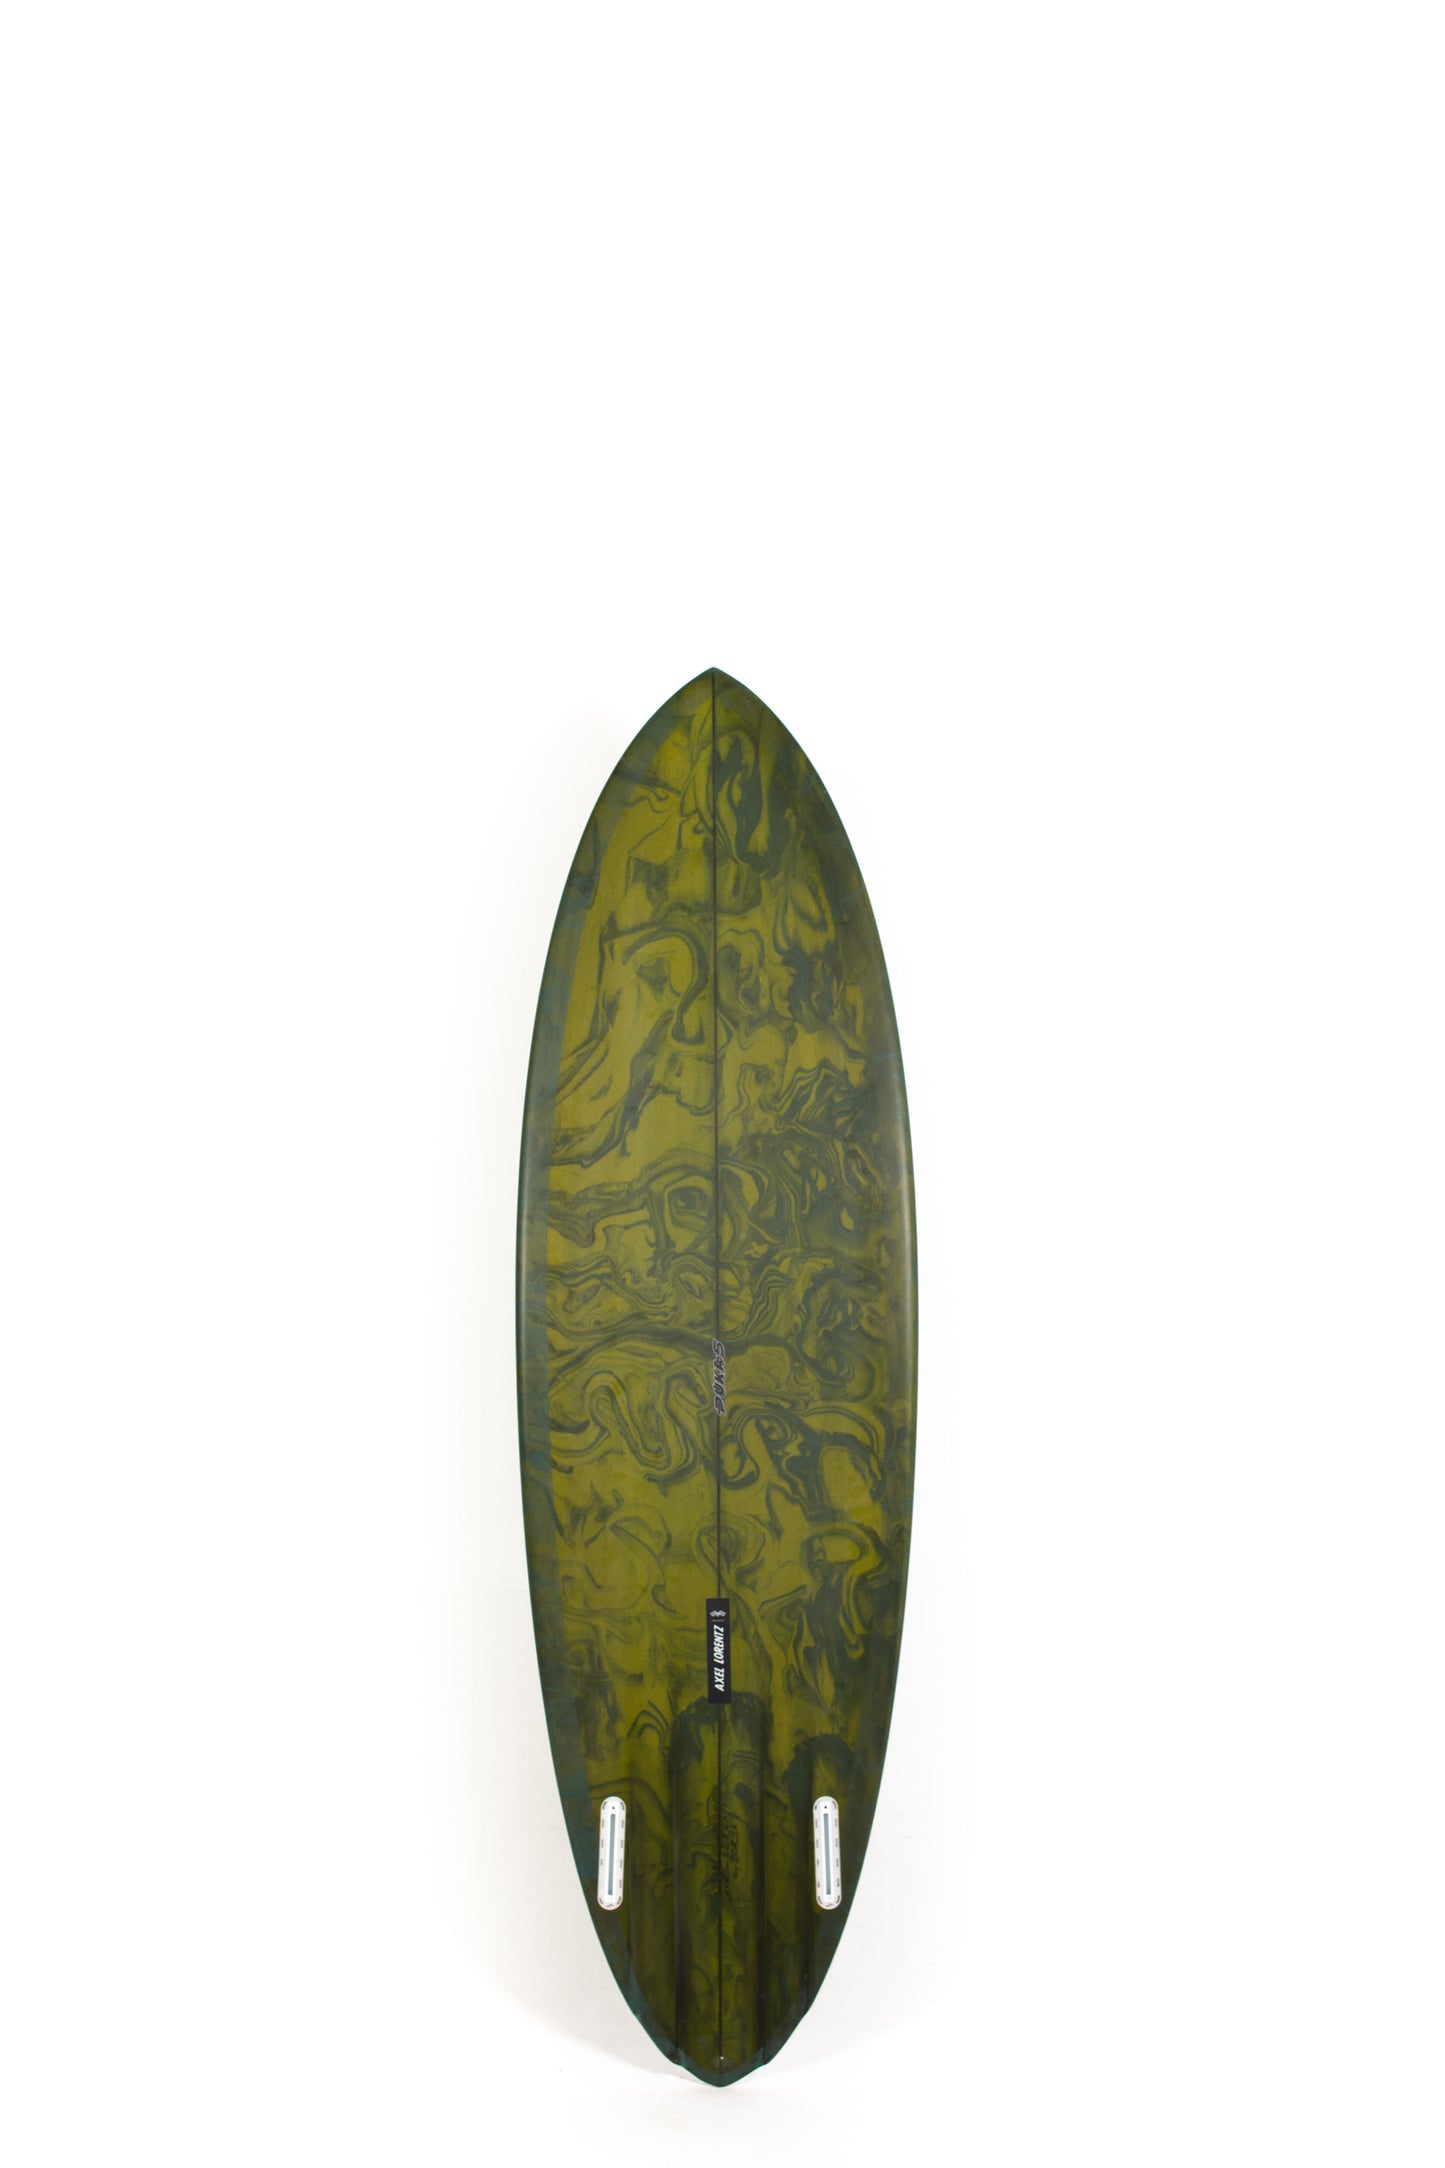 Pukas Surf Shop - Pukas Surfboard - LADY TWIN by Axel Lorentz - 6’2” x 20,5 x 2,63 - 34,9L - AX09703